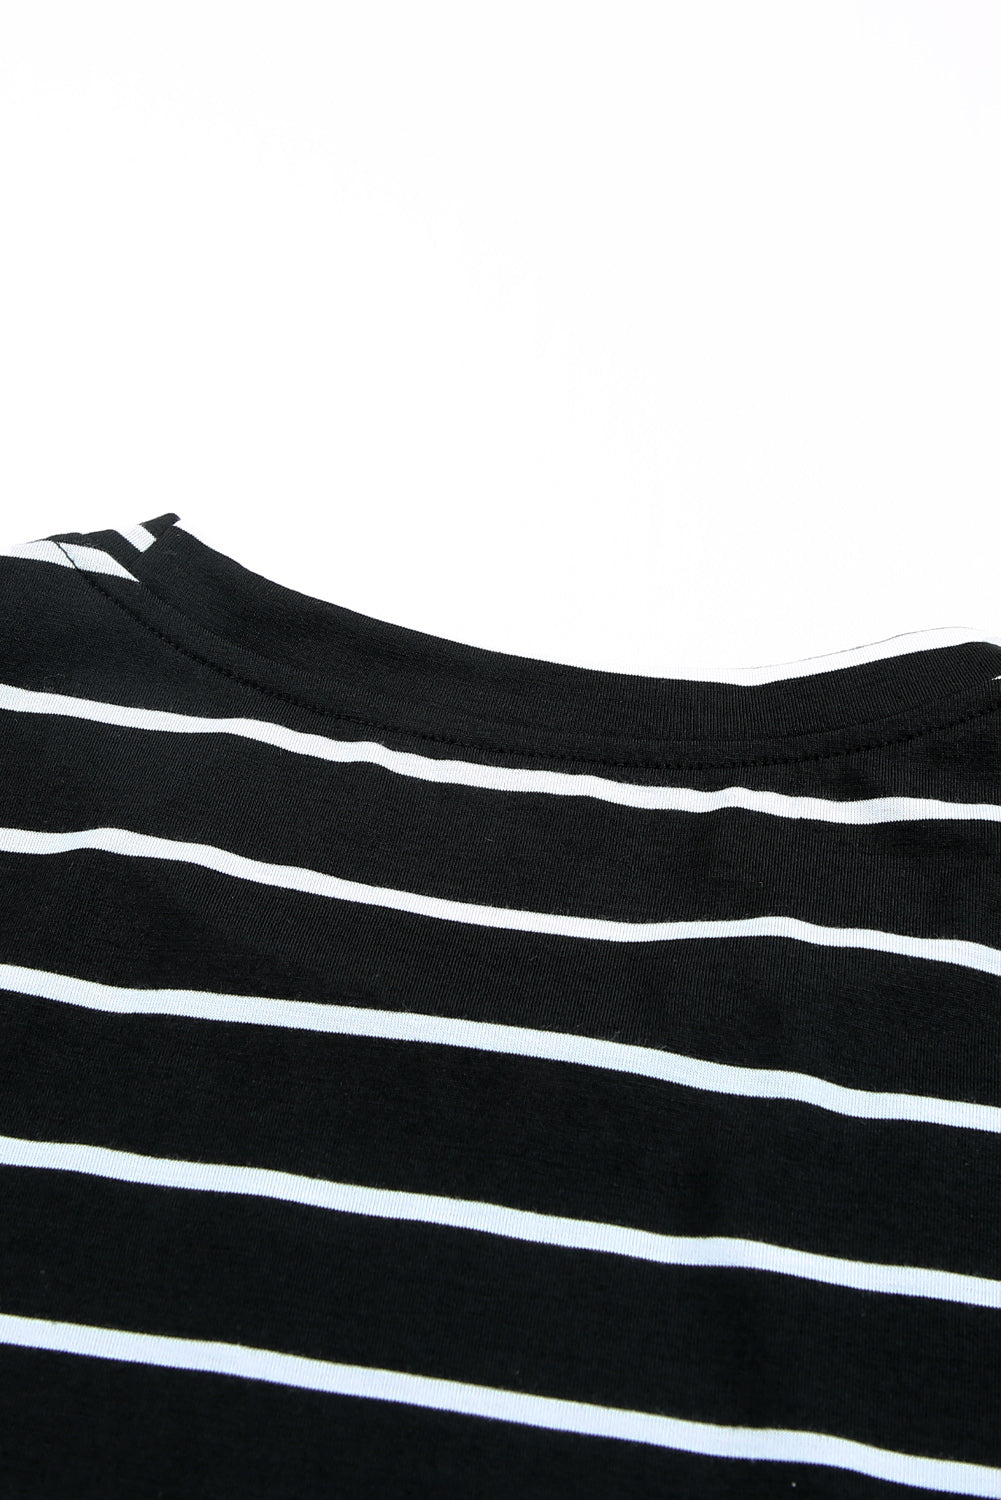 Black Stripe Print Lace Patchwork Short Sleeve T-Shirt